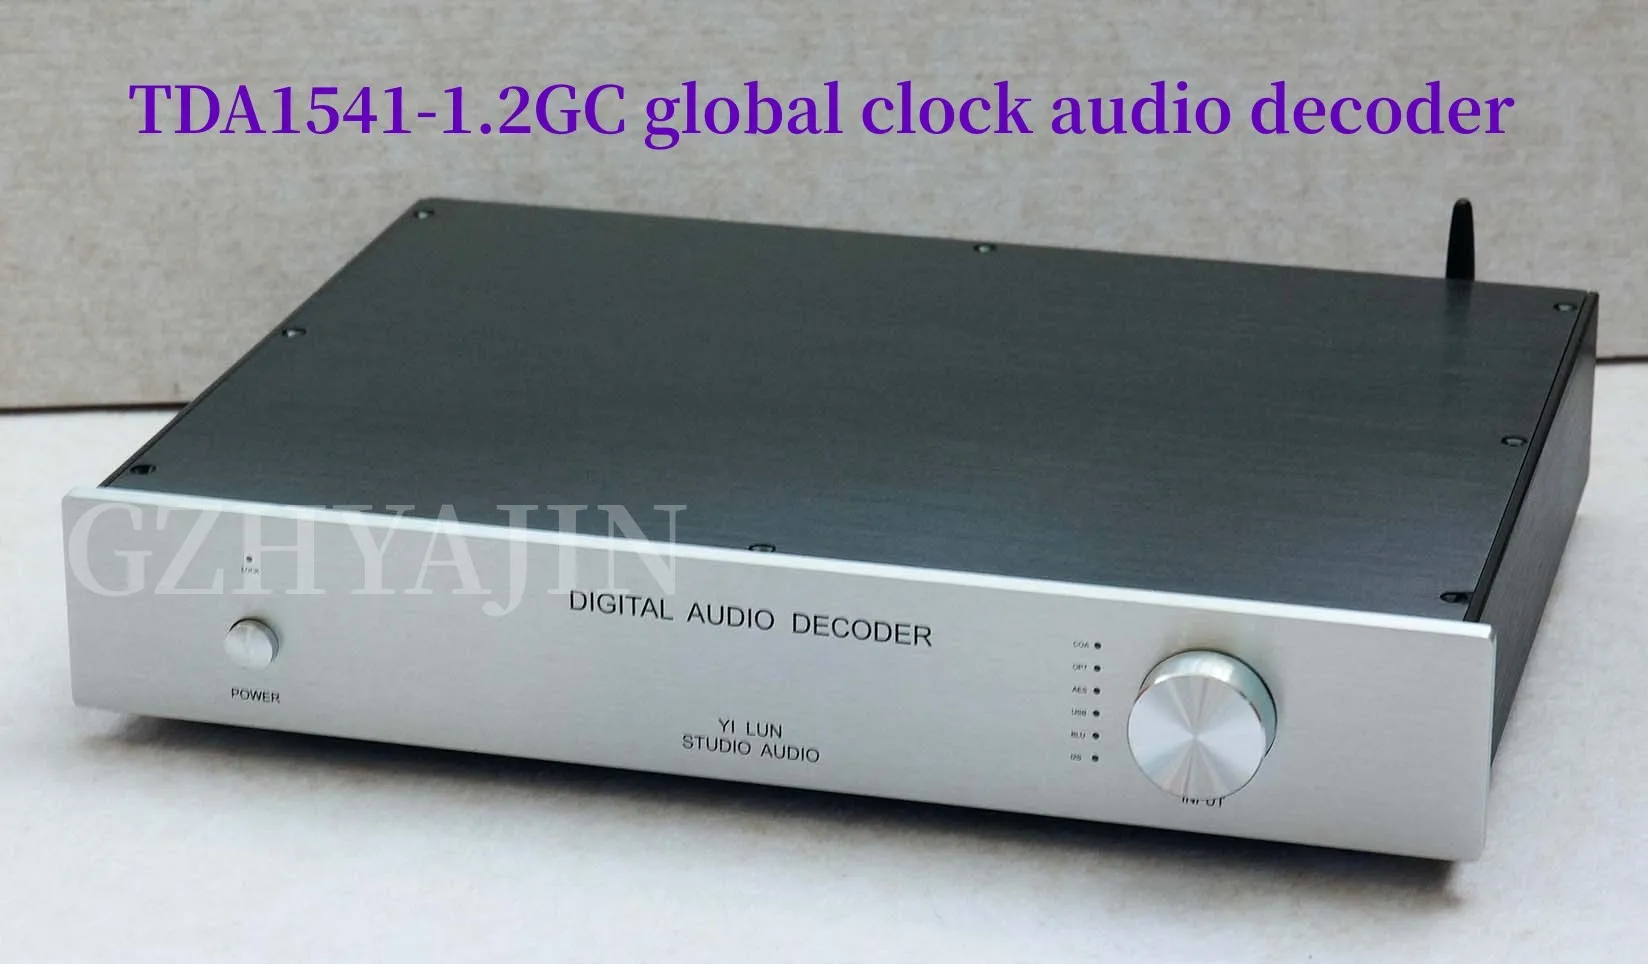 

TDA1541-1.2GC global clock audio decoder